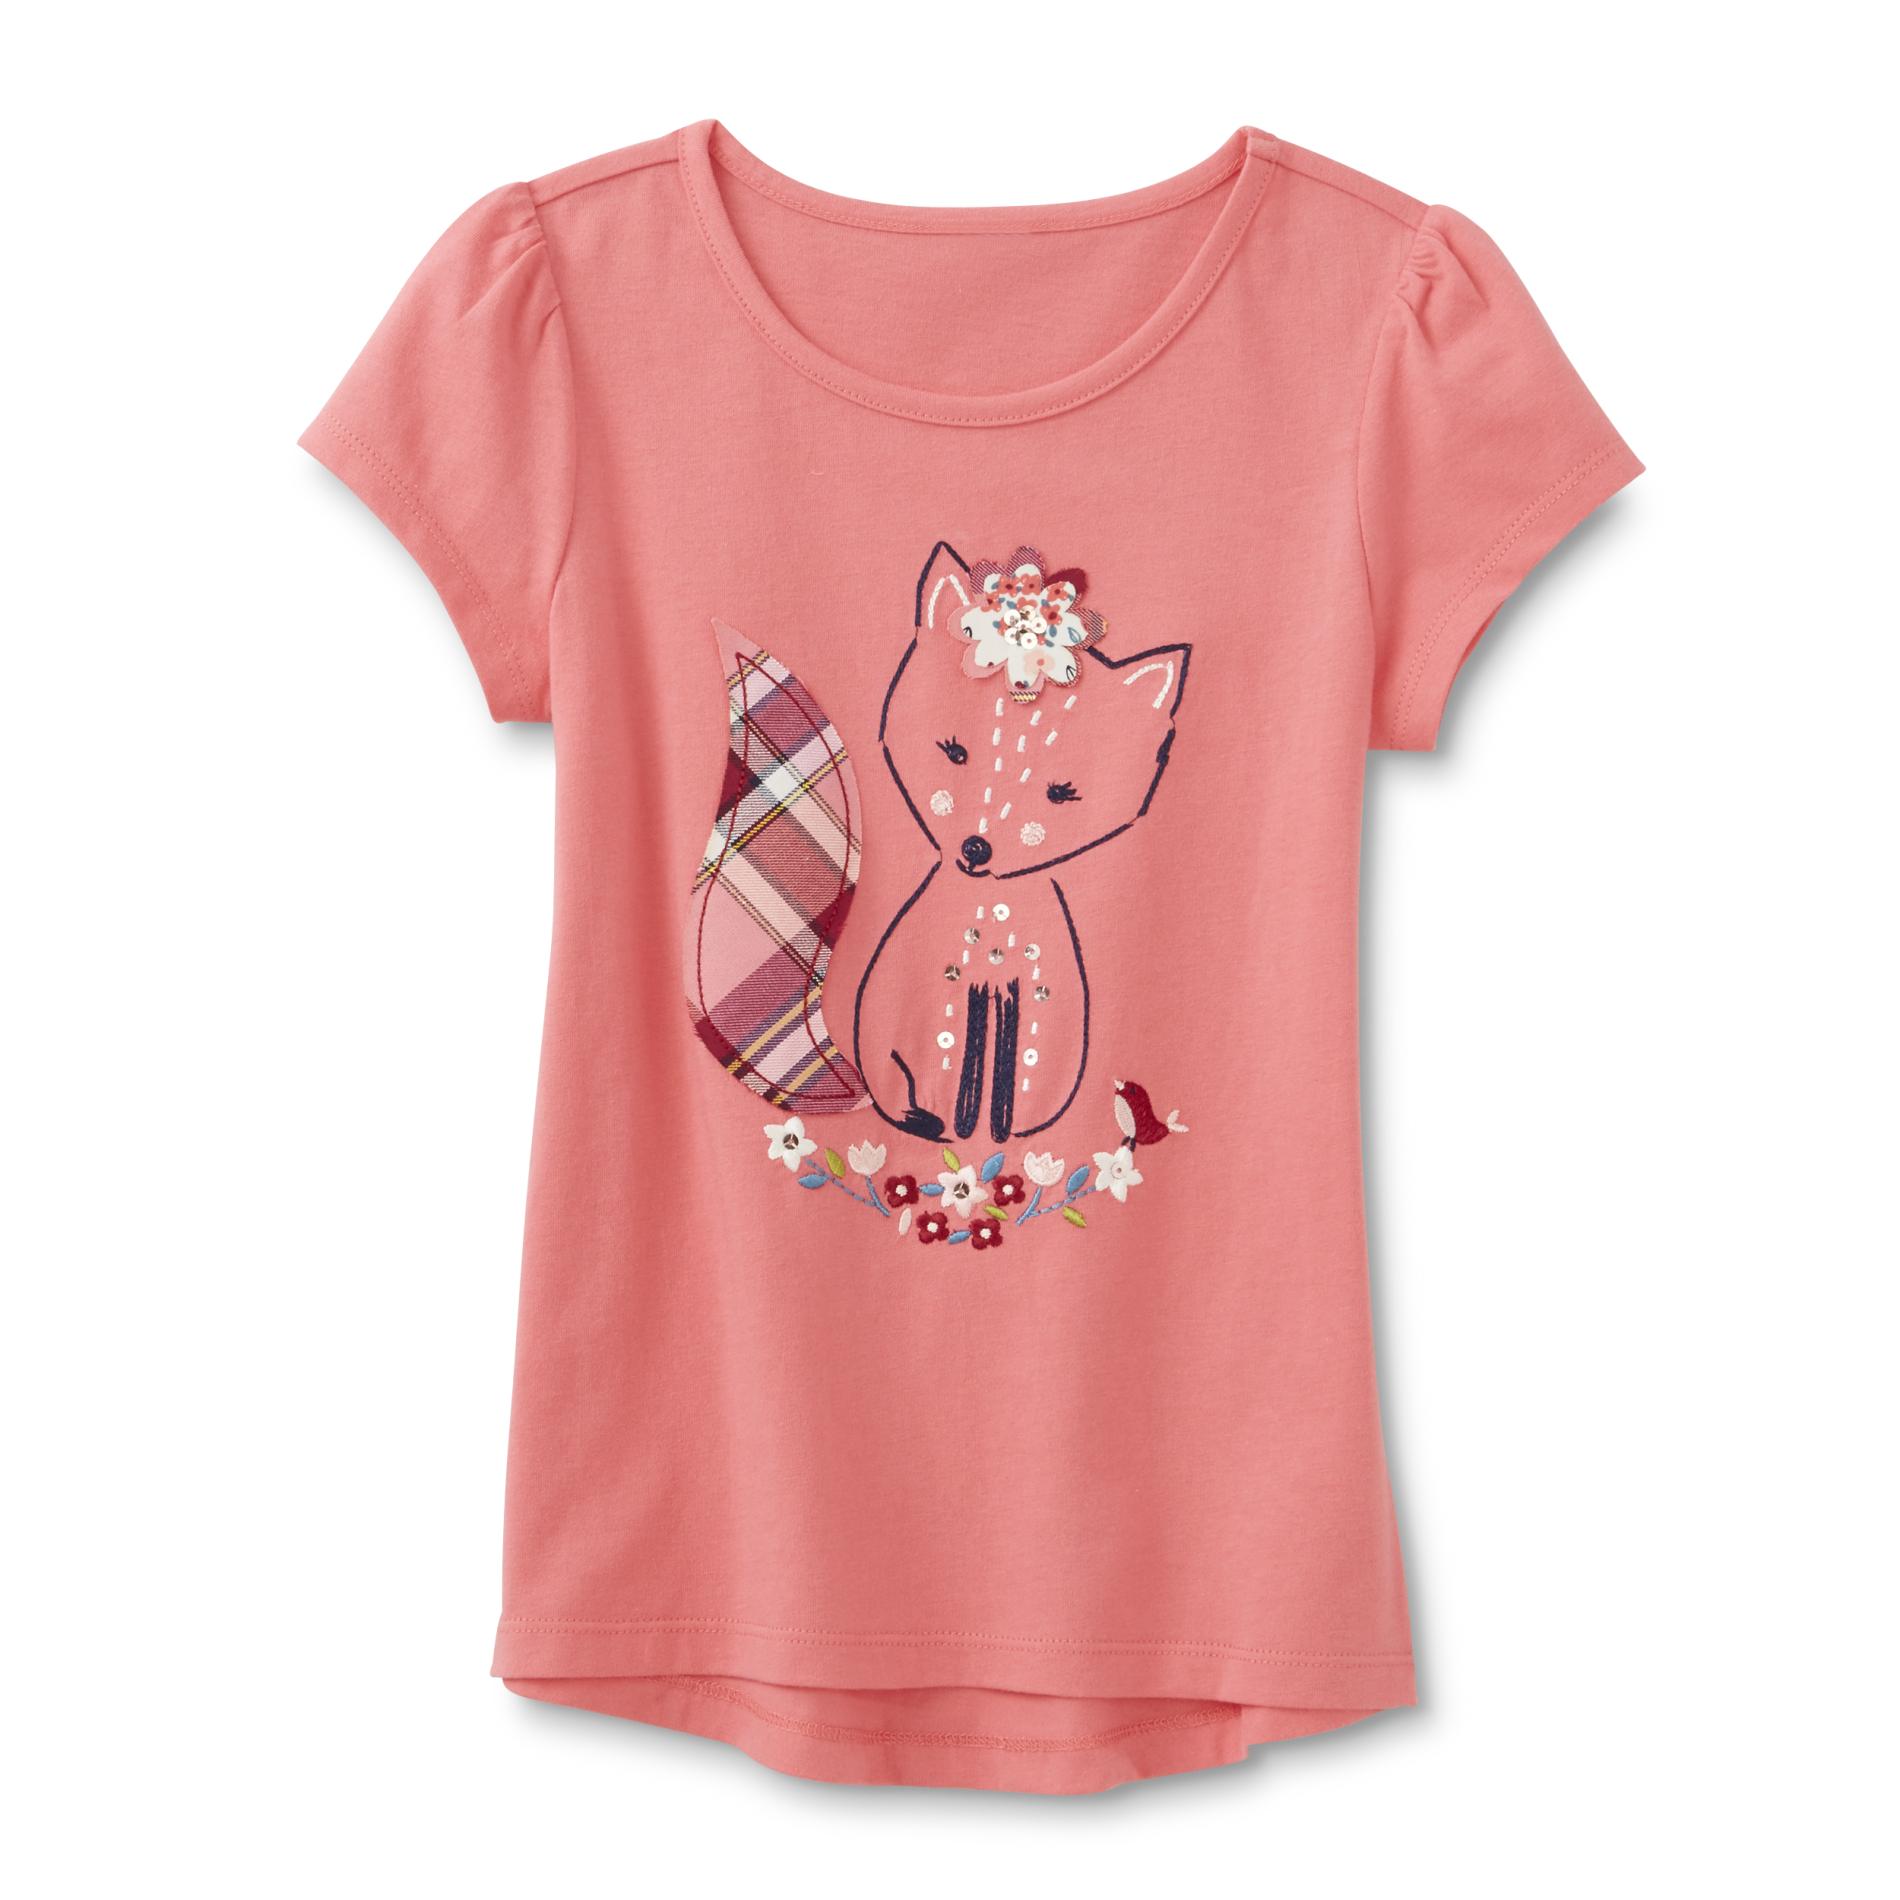 Toughskins Girl's Embellished T-Shirt - Fox